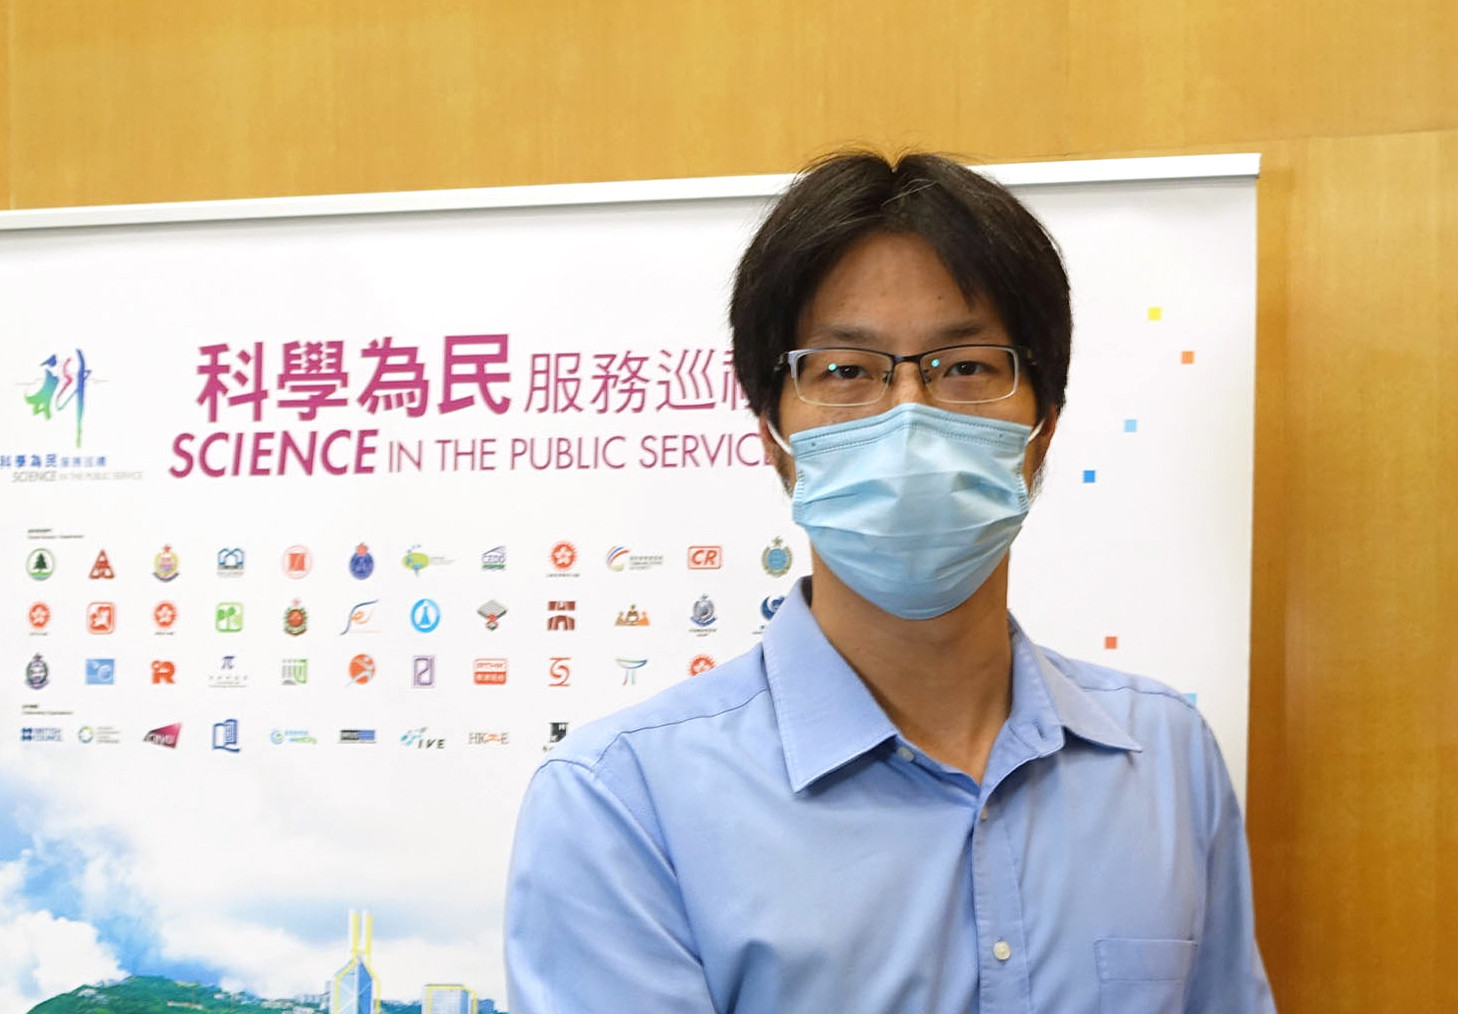 Dr Condon Lau Spoke at the “Science in the Public Service” Campaign